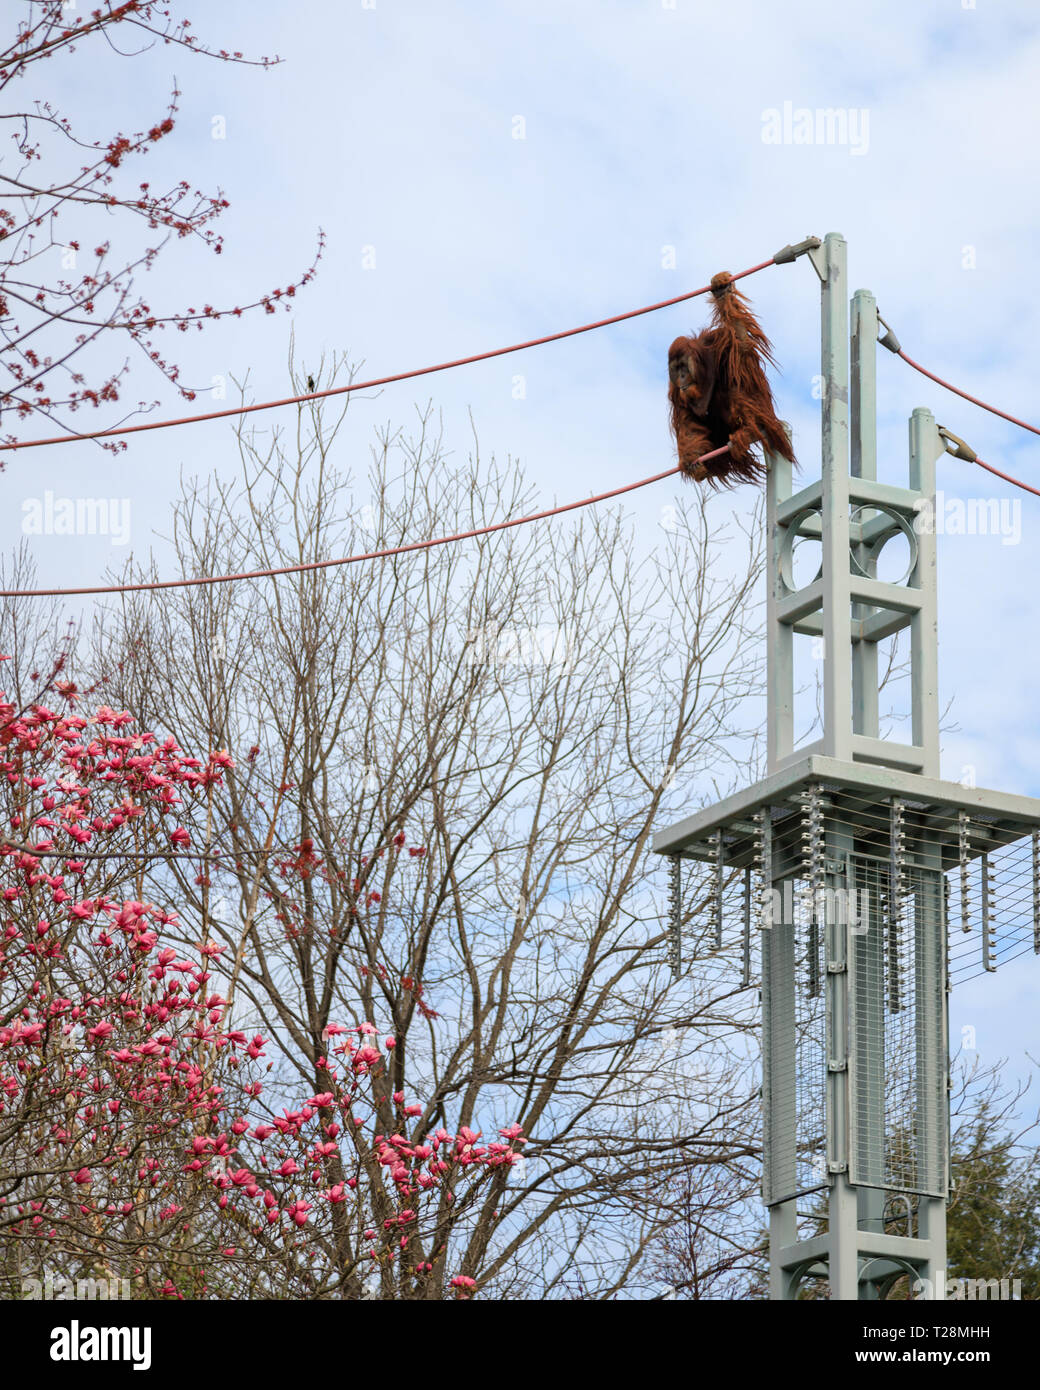 An orangutan swinging from the high line over Smithsonian National Zoo in Washington, DC Stock Photo